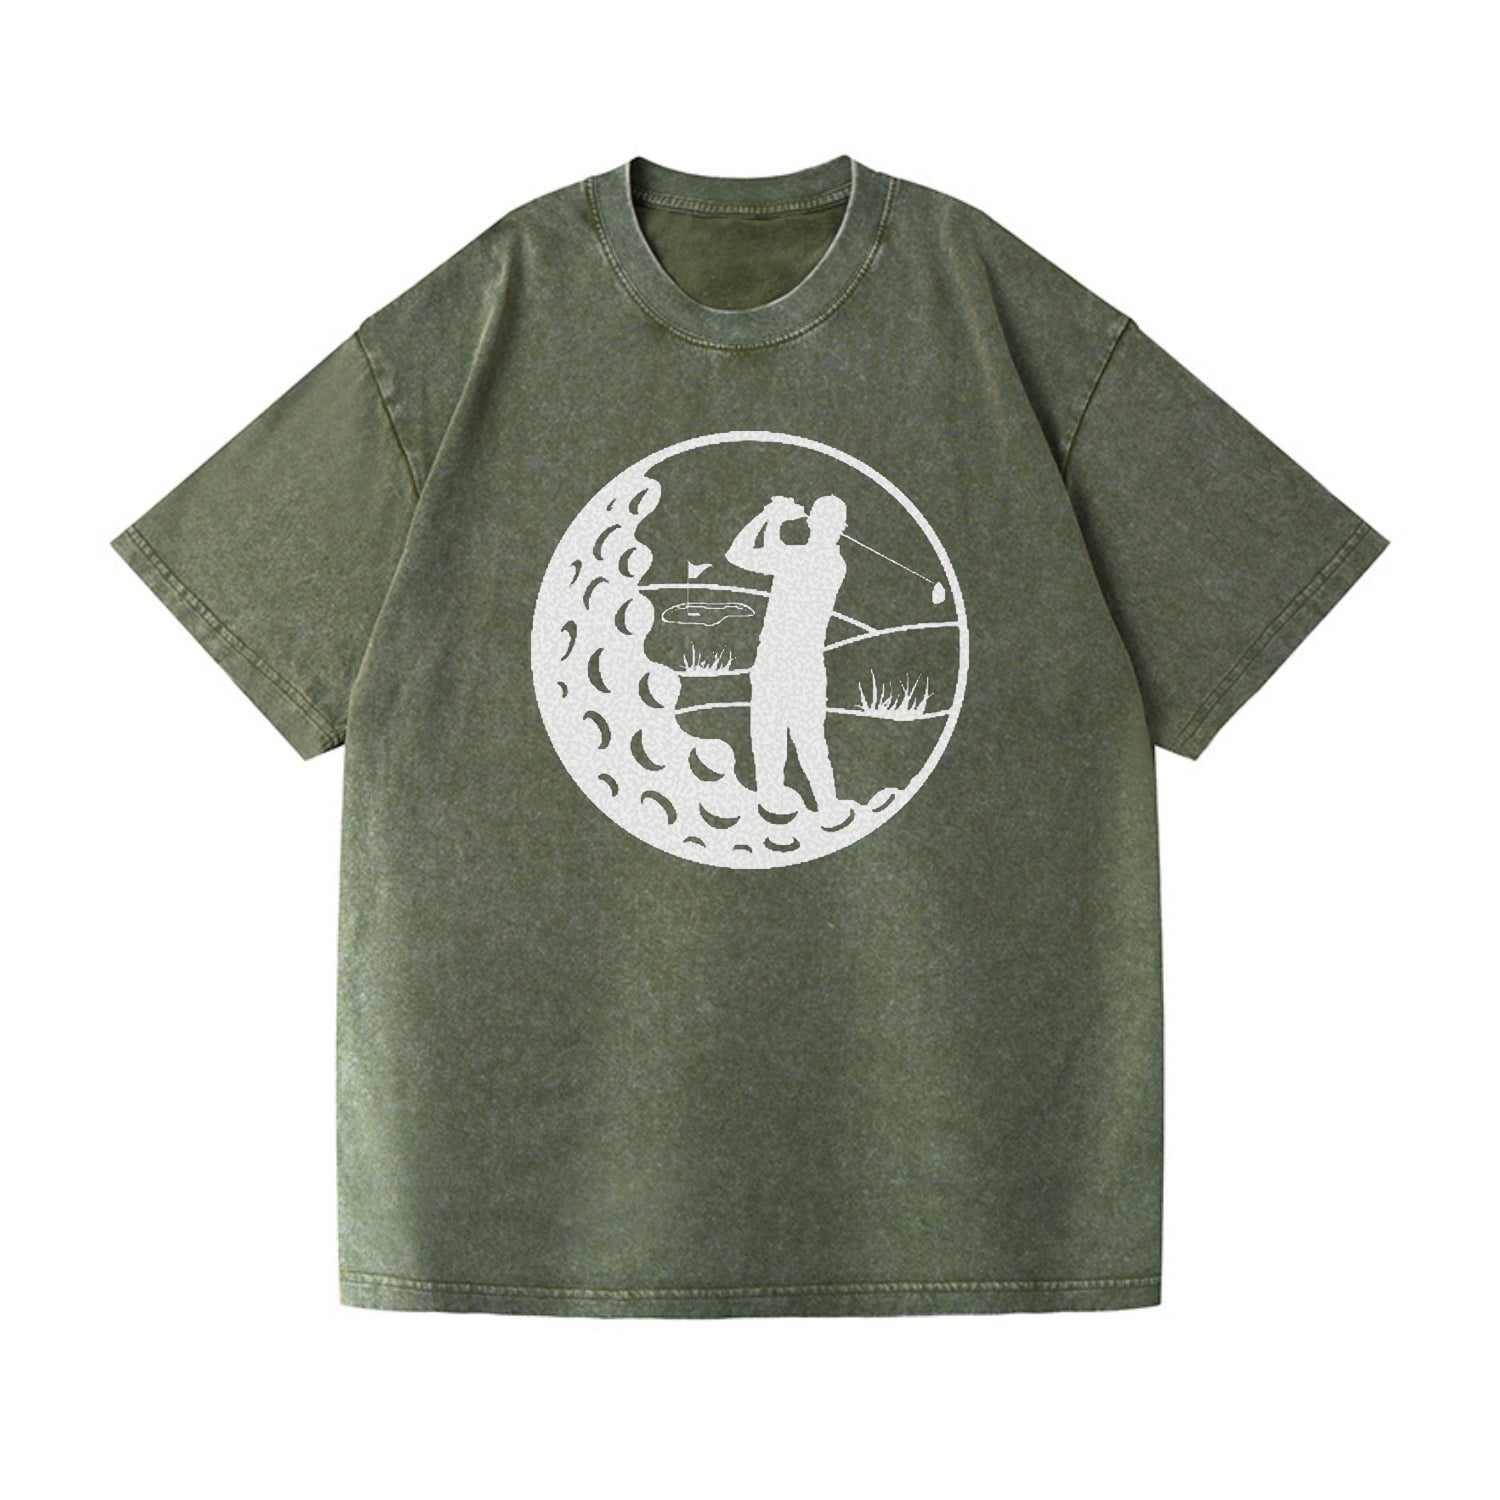 Golf World 1 Vintage T-shirt